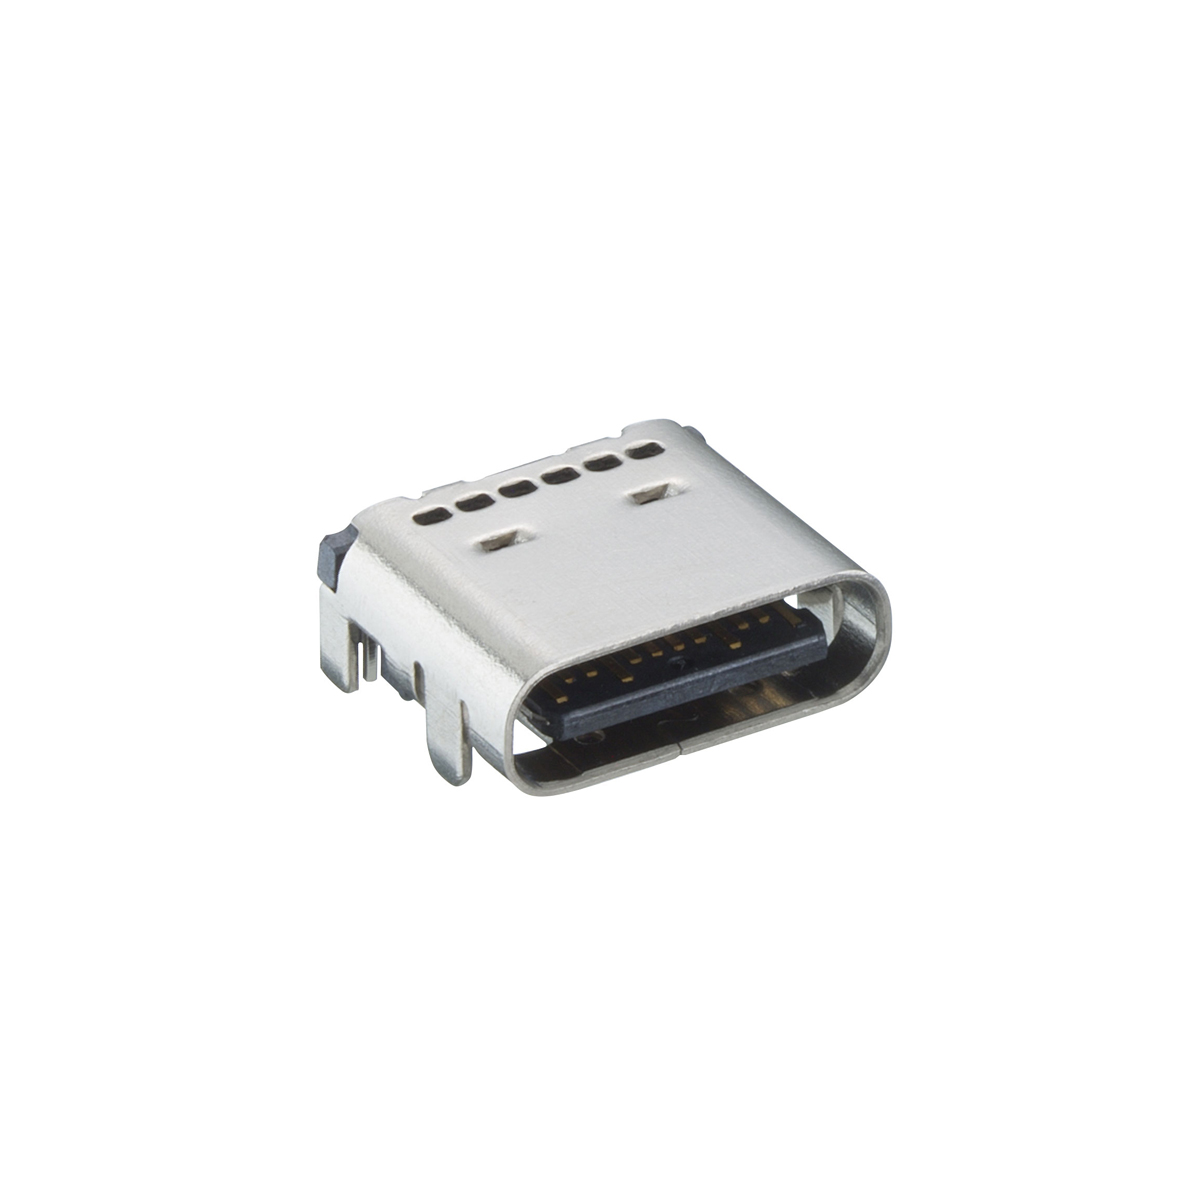 Lumberg: 2436 01 (Series 24 | USB and IEEE 1394 connectors)